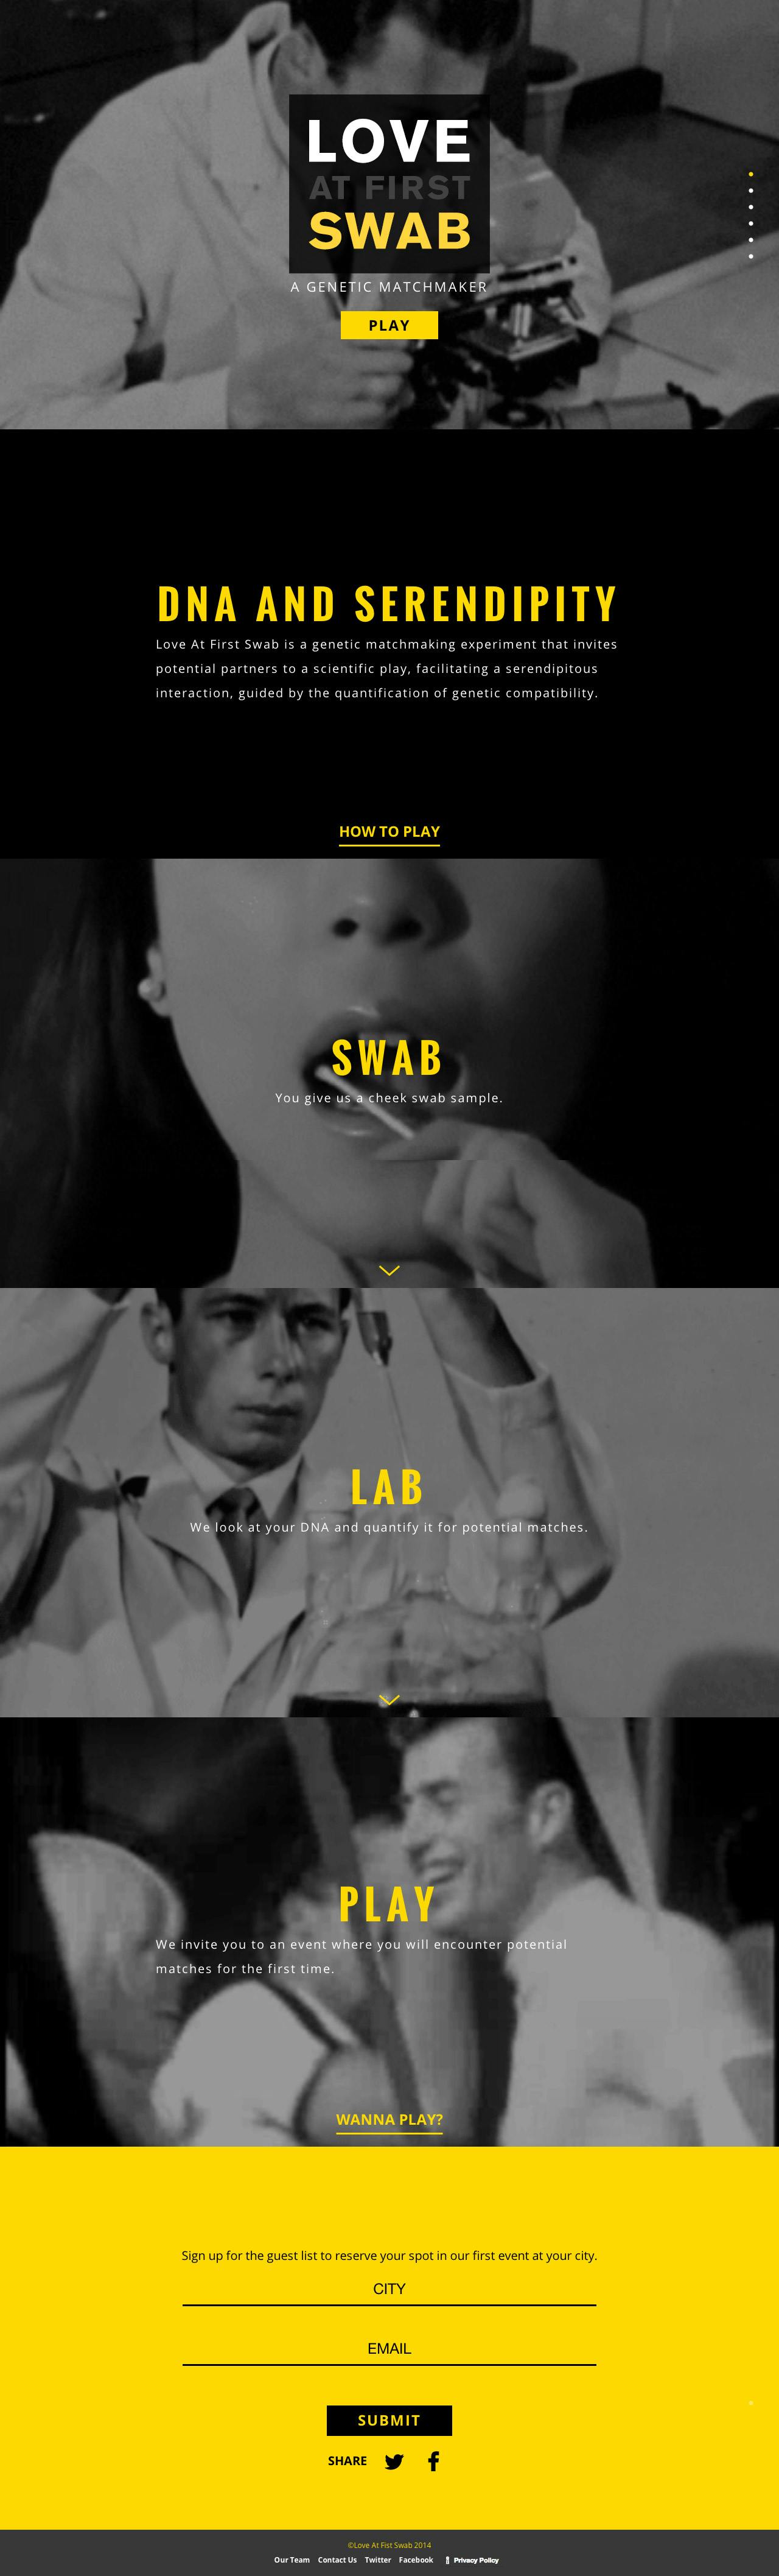 Love At First Swab Website Screenshot